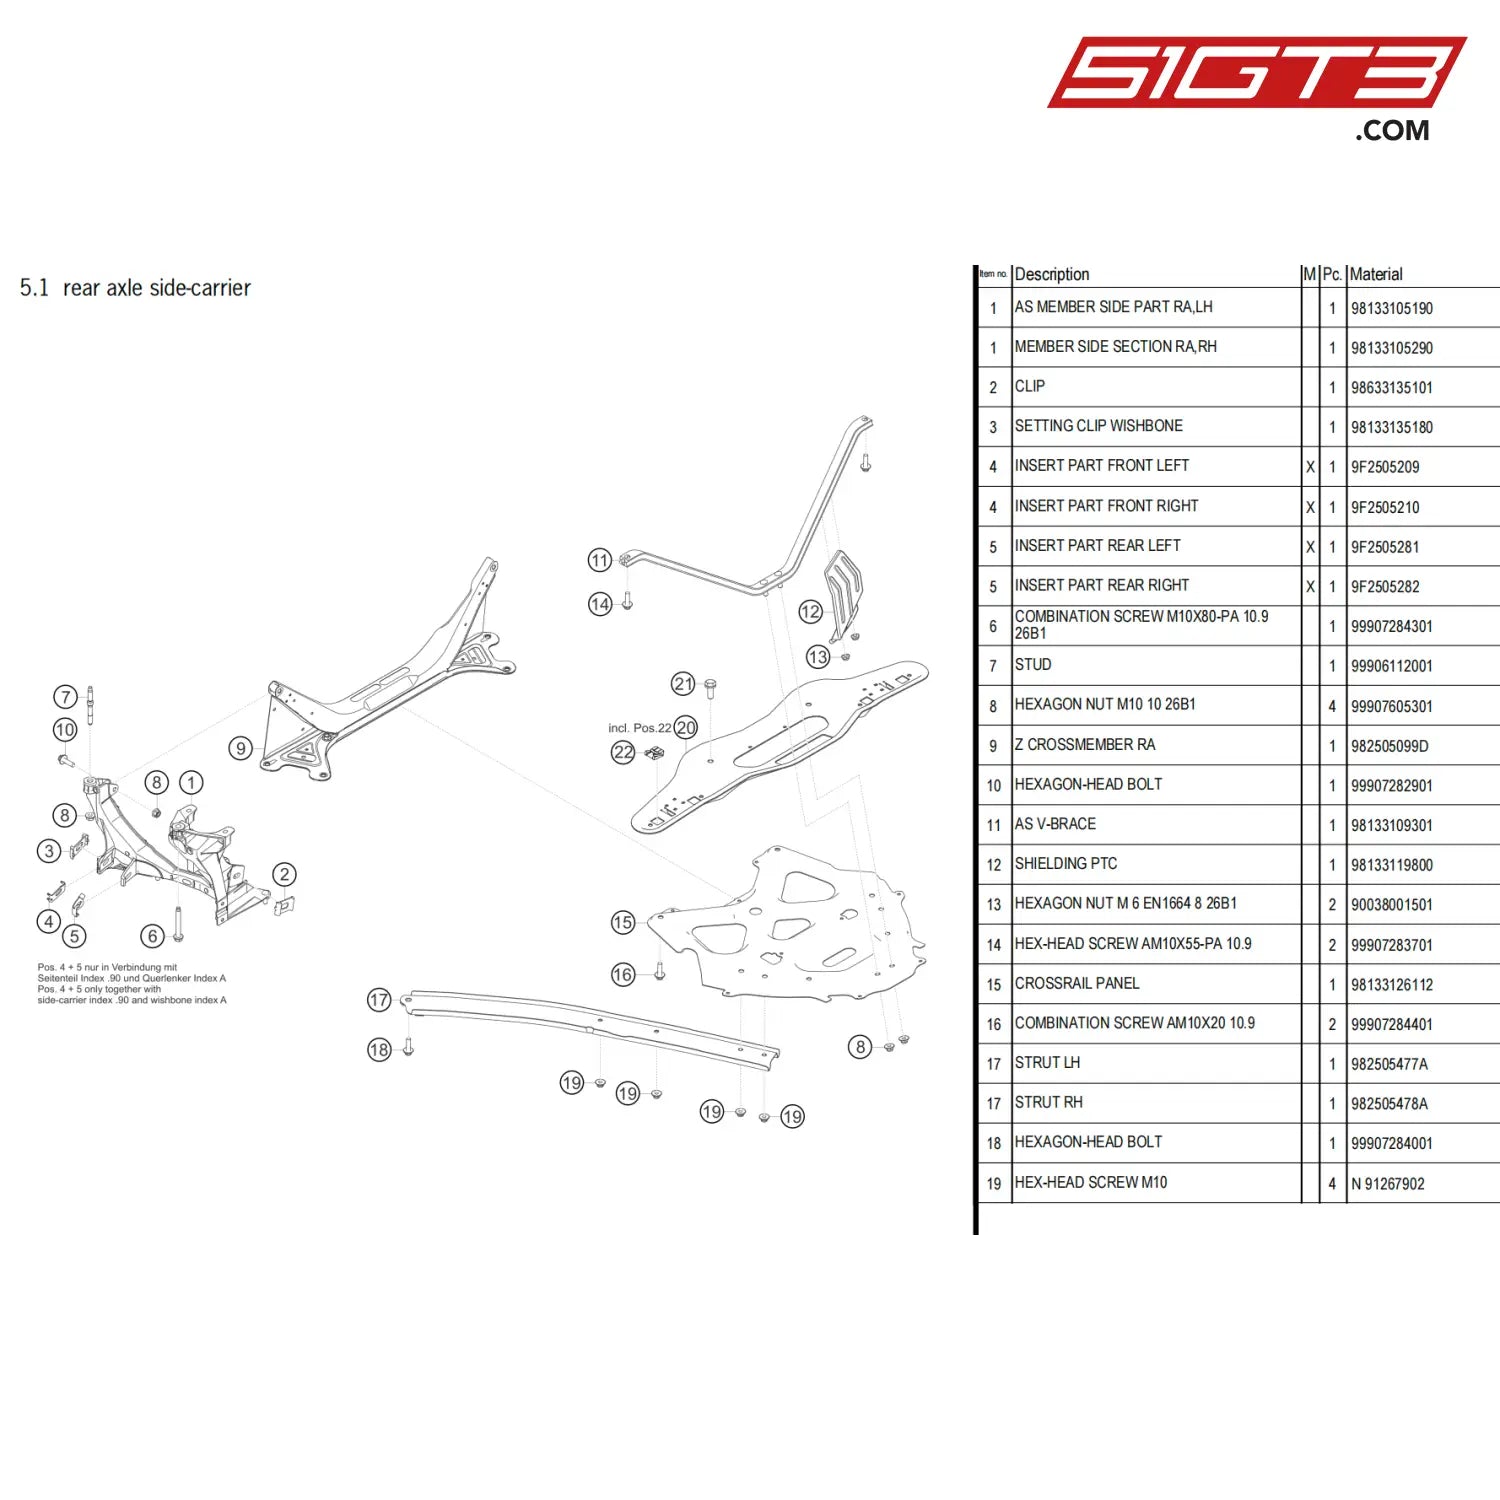 Setting Clip Wishbone - 98133135180 [Porsche 718 Cayman Gt4 Clubsport] Rear Axle Side-Carrier